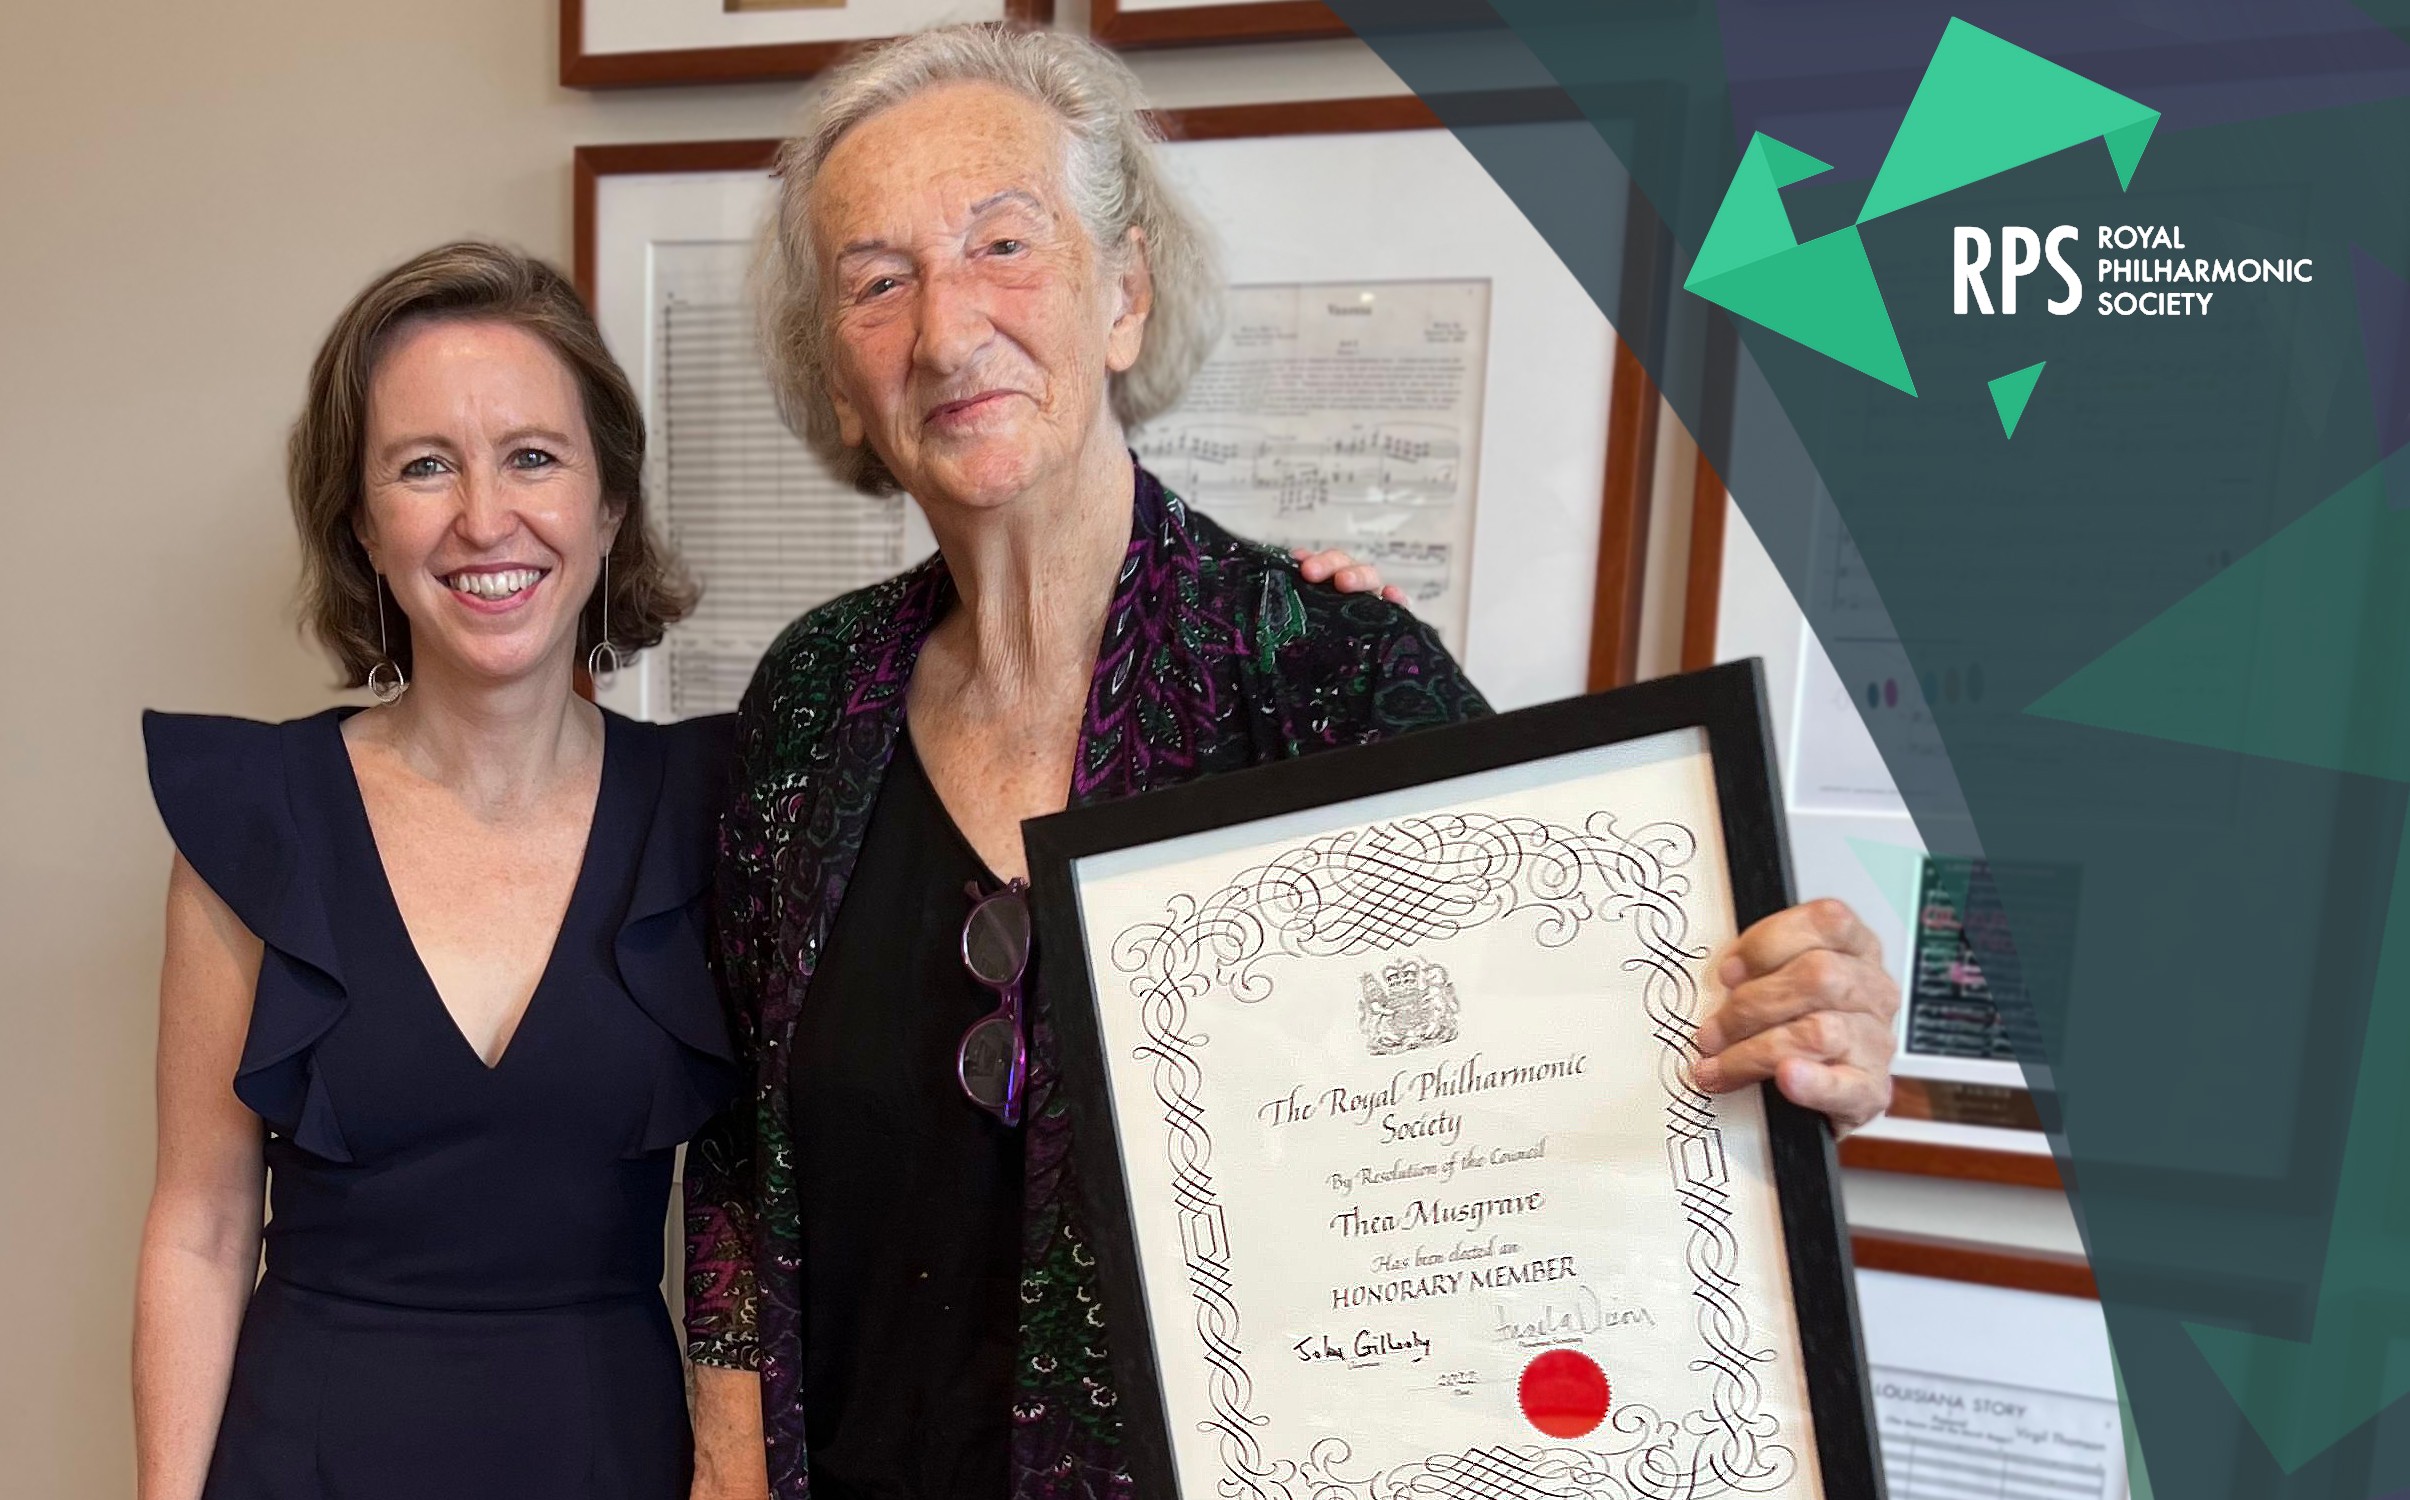 Thea Musgrave awarded Honorary Membership of the Royal Philharmonic Society